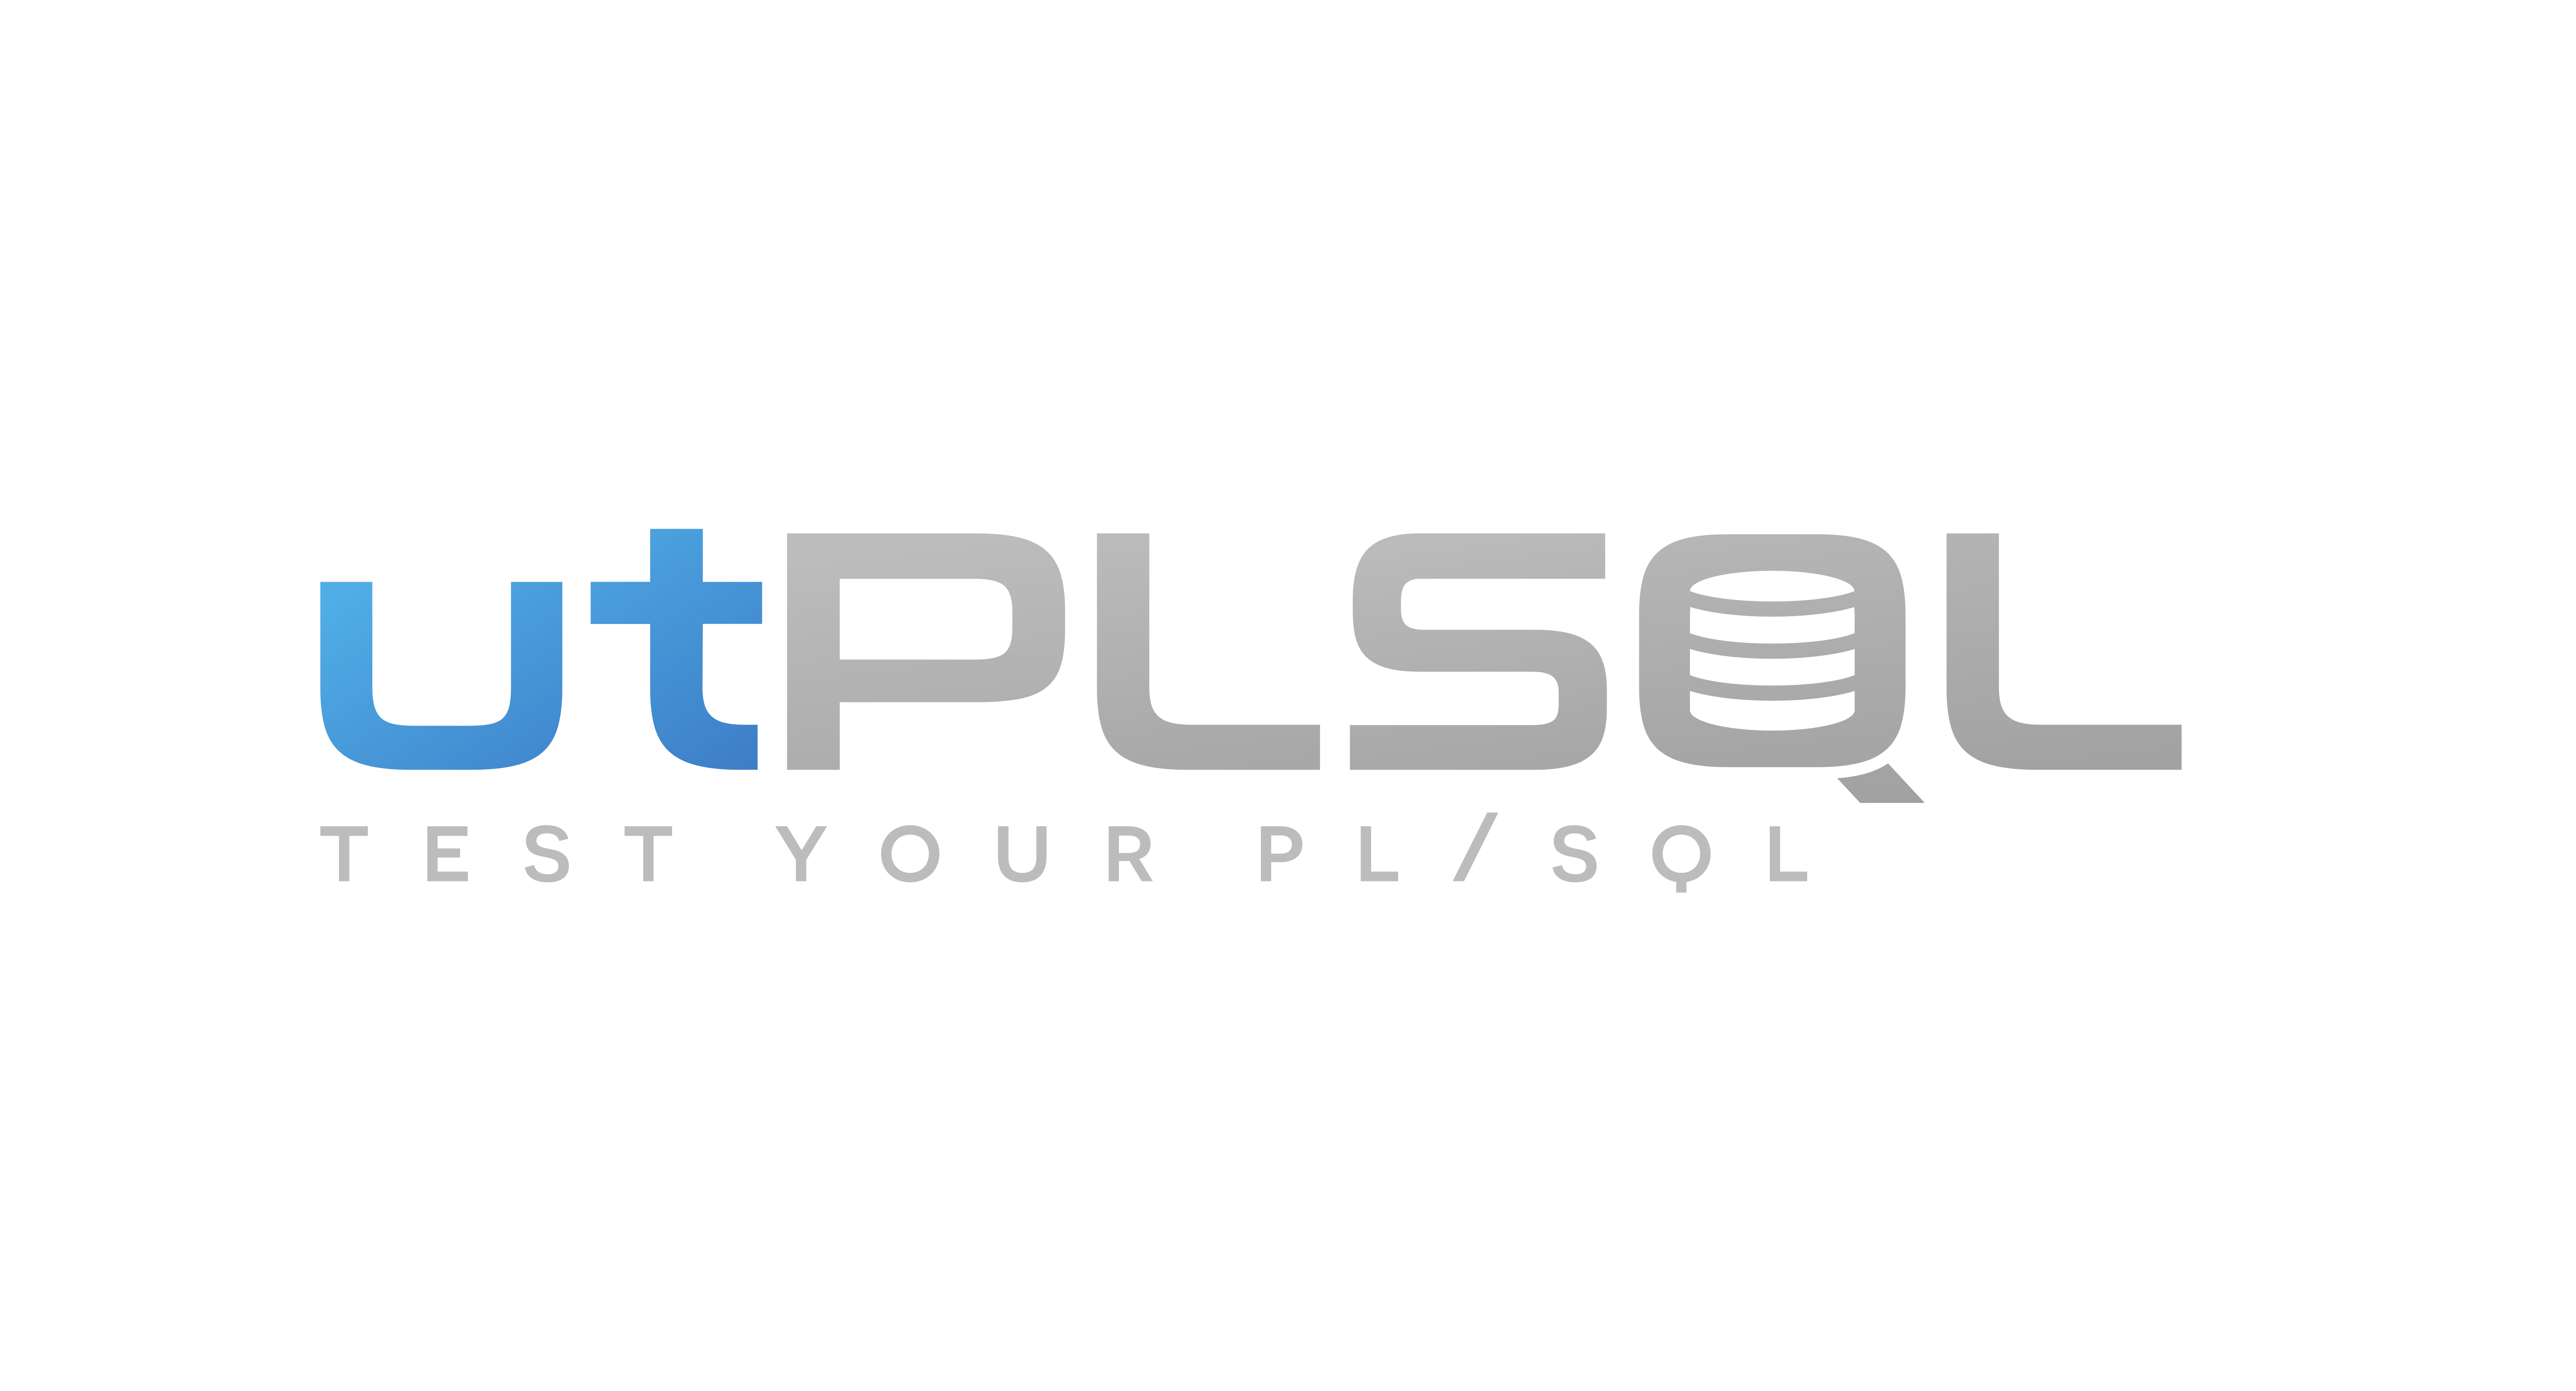 utPLSQL-test-your-plsql-transparent.png